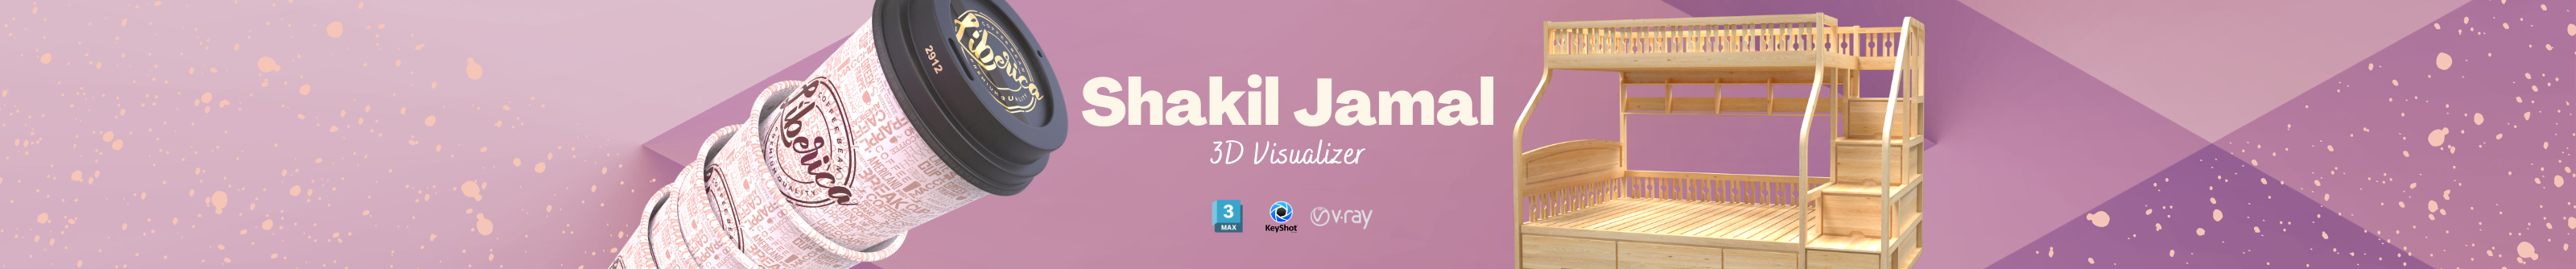 Shakil Jamal's profile banner